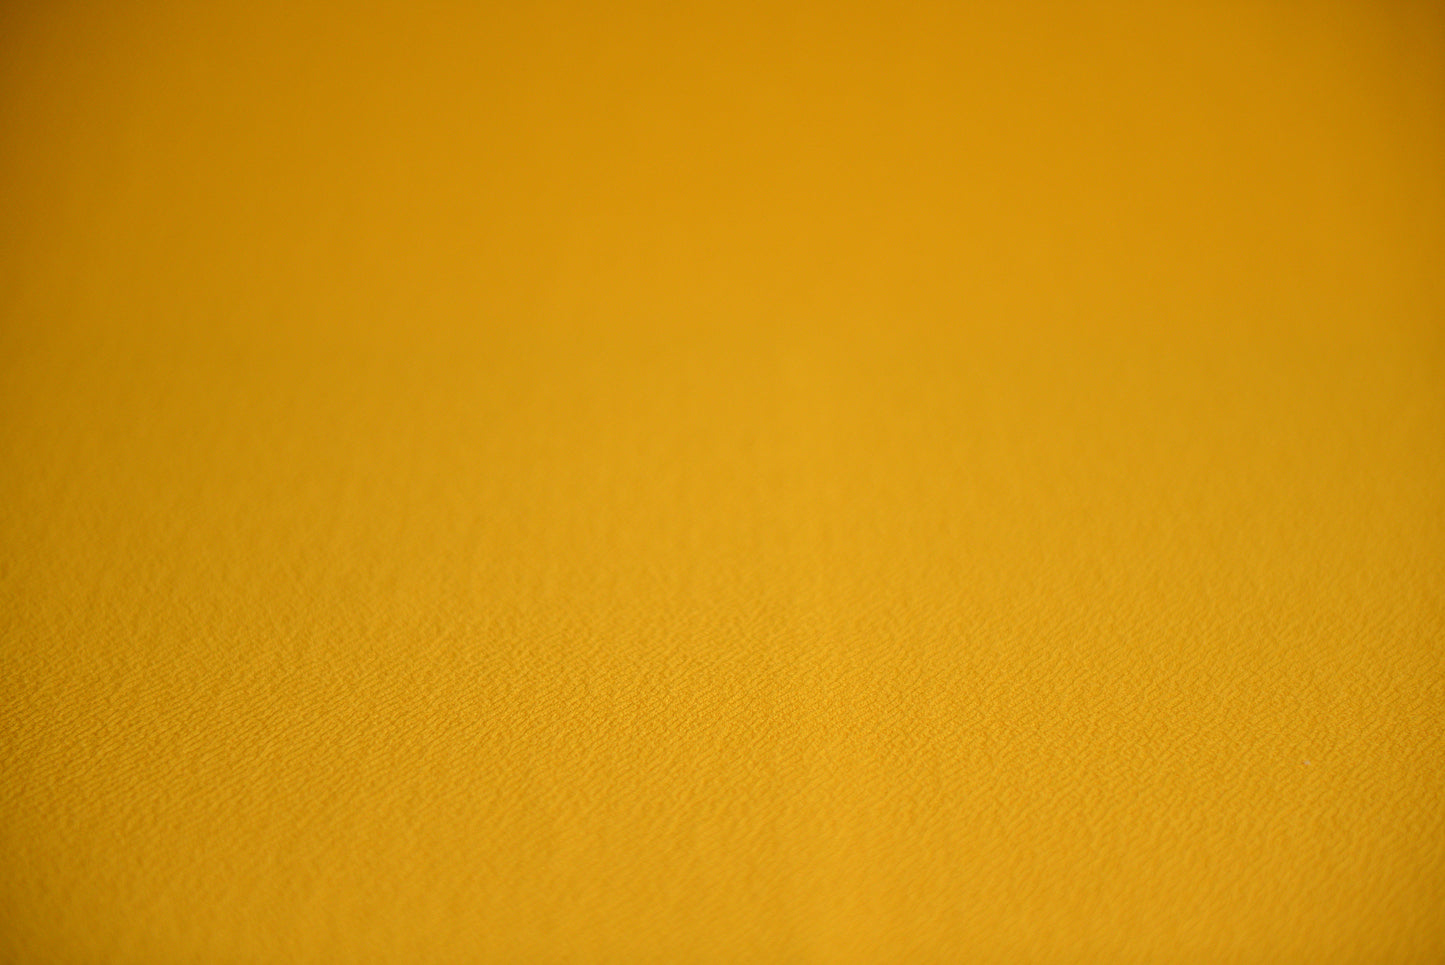 Bean Bag Fabric - Textured - Mustard-Newborn Photography Props